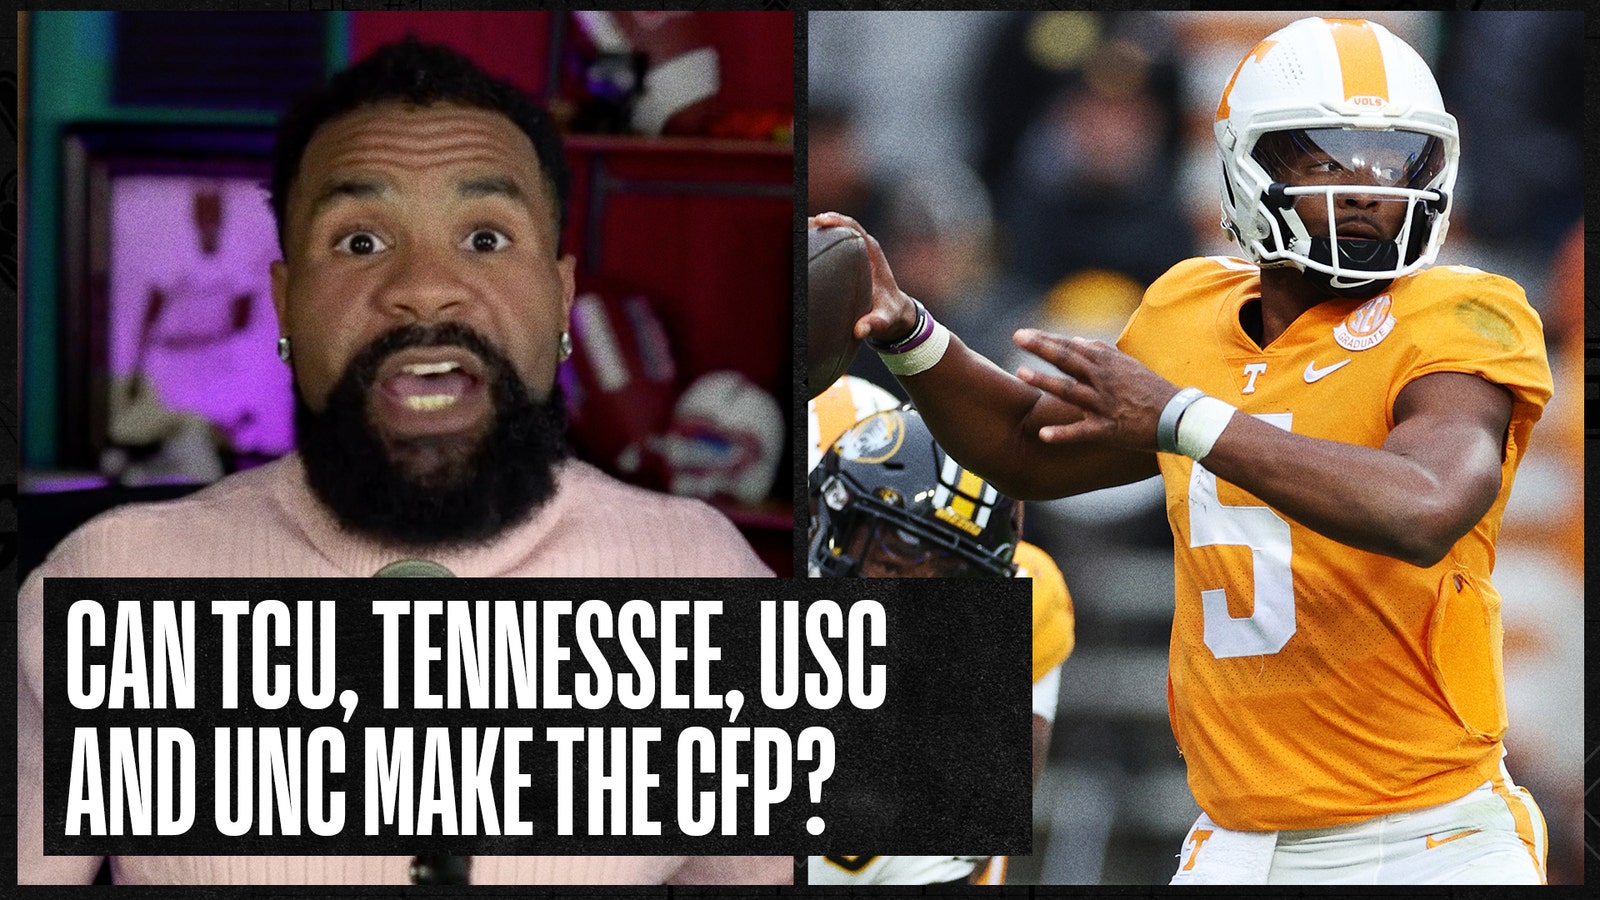 Can TCU, Tennessee, USC or North Carolina make the CFP?